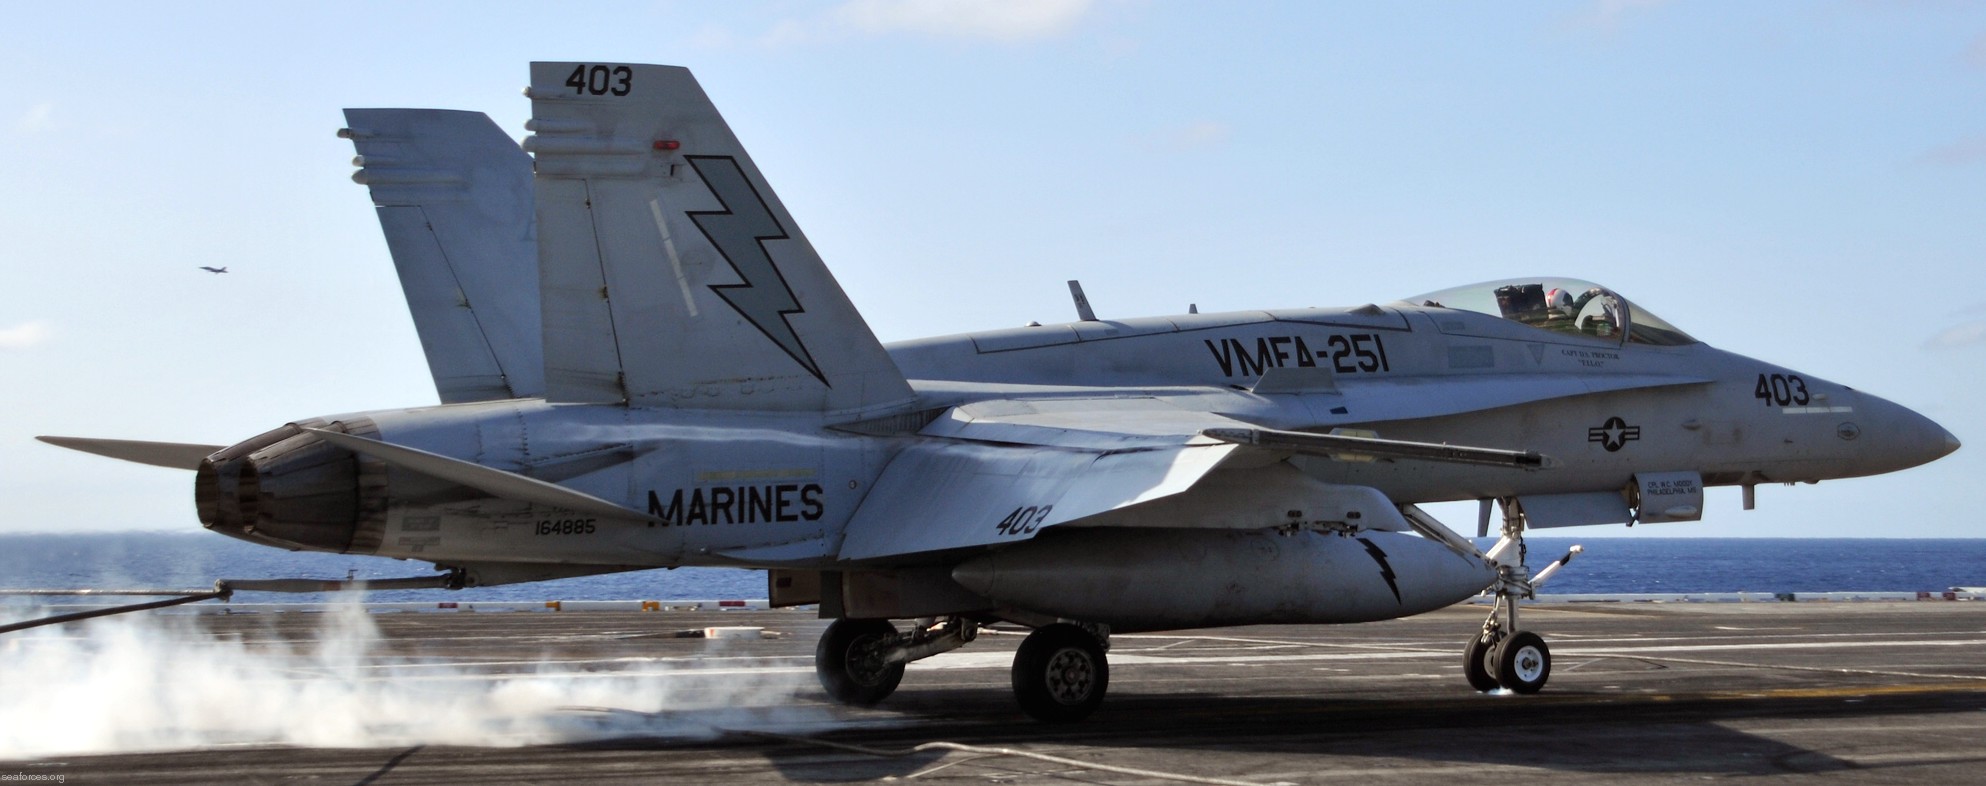 vmfa-251 thunderbolts marine fighter attack squadron f/a-18c hornet cvw-1 uss enterprise cvn-65 41